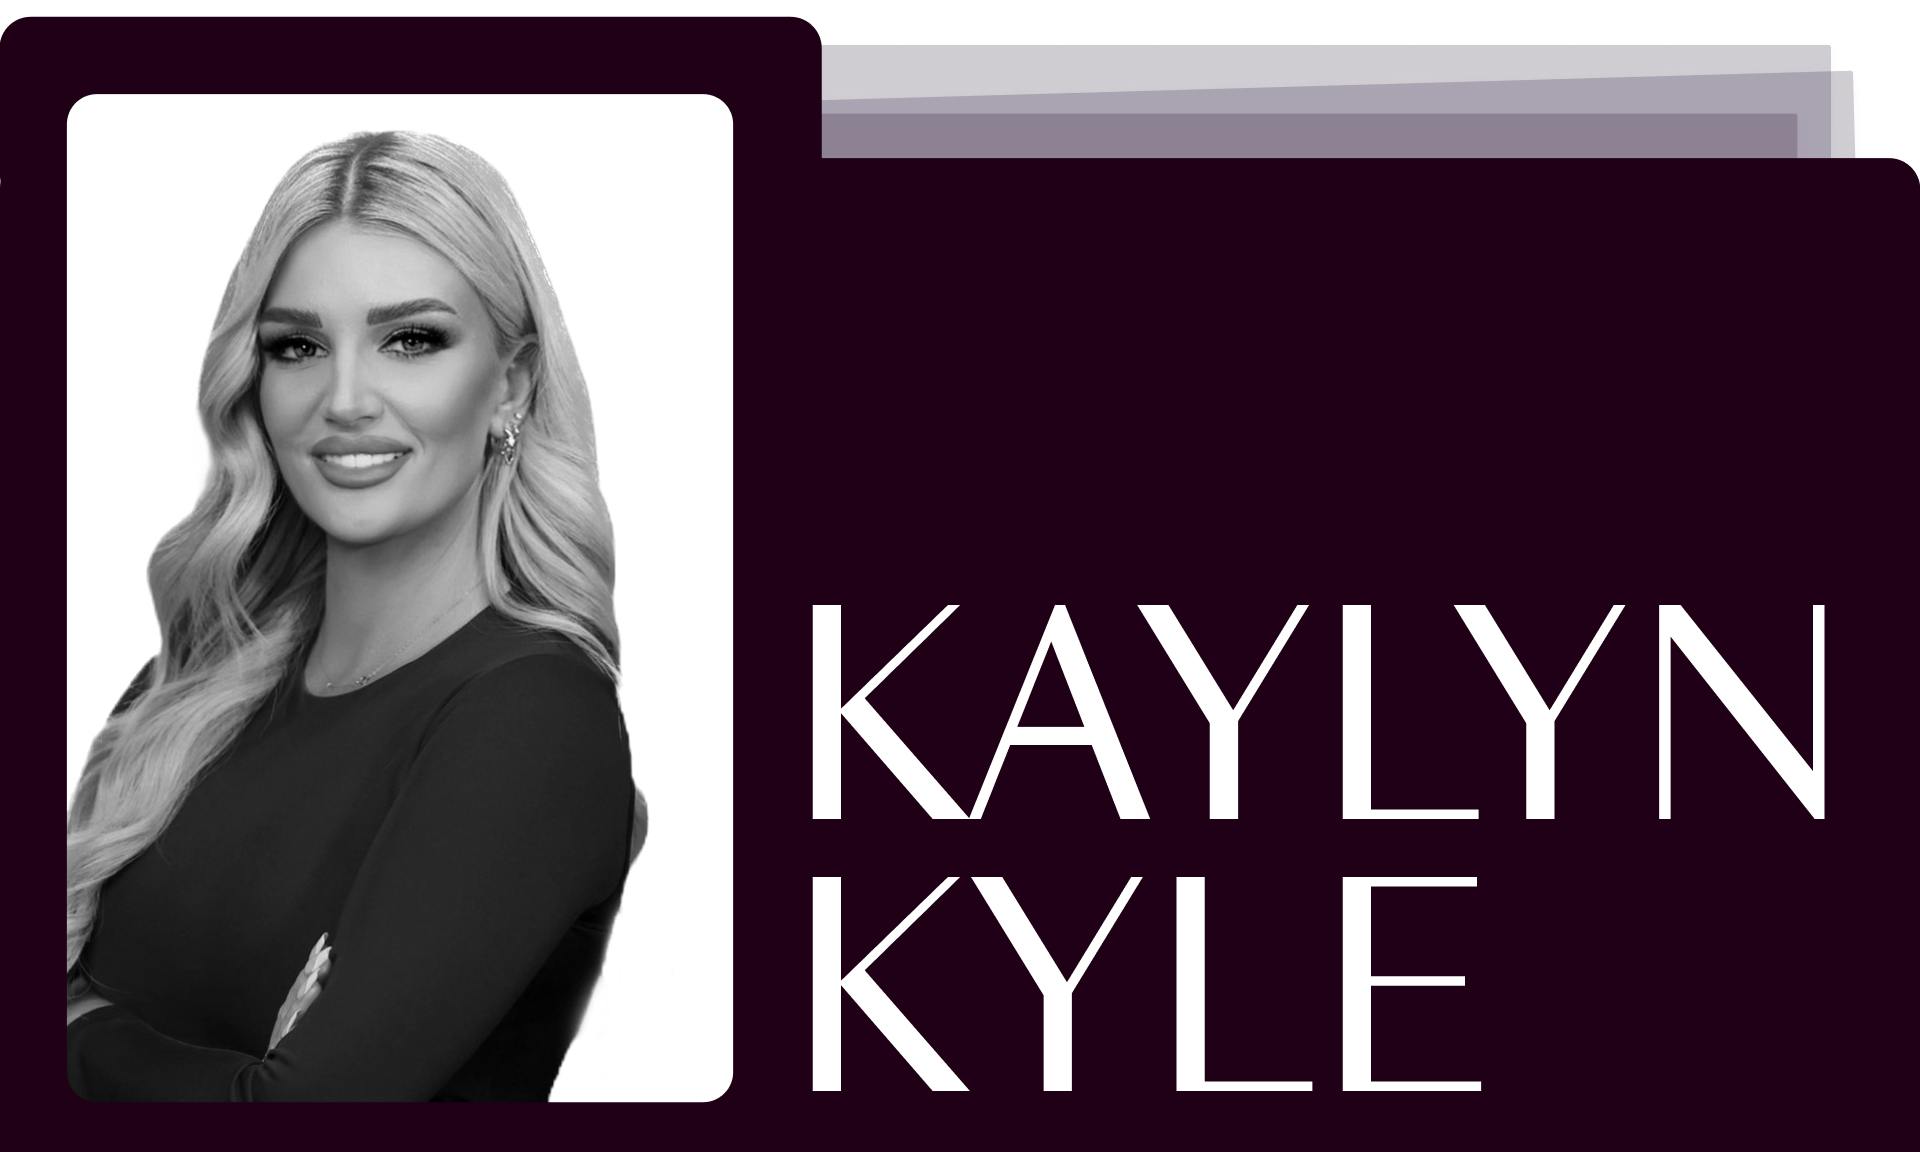 Kaylyn Kyle headshot